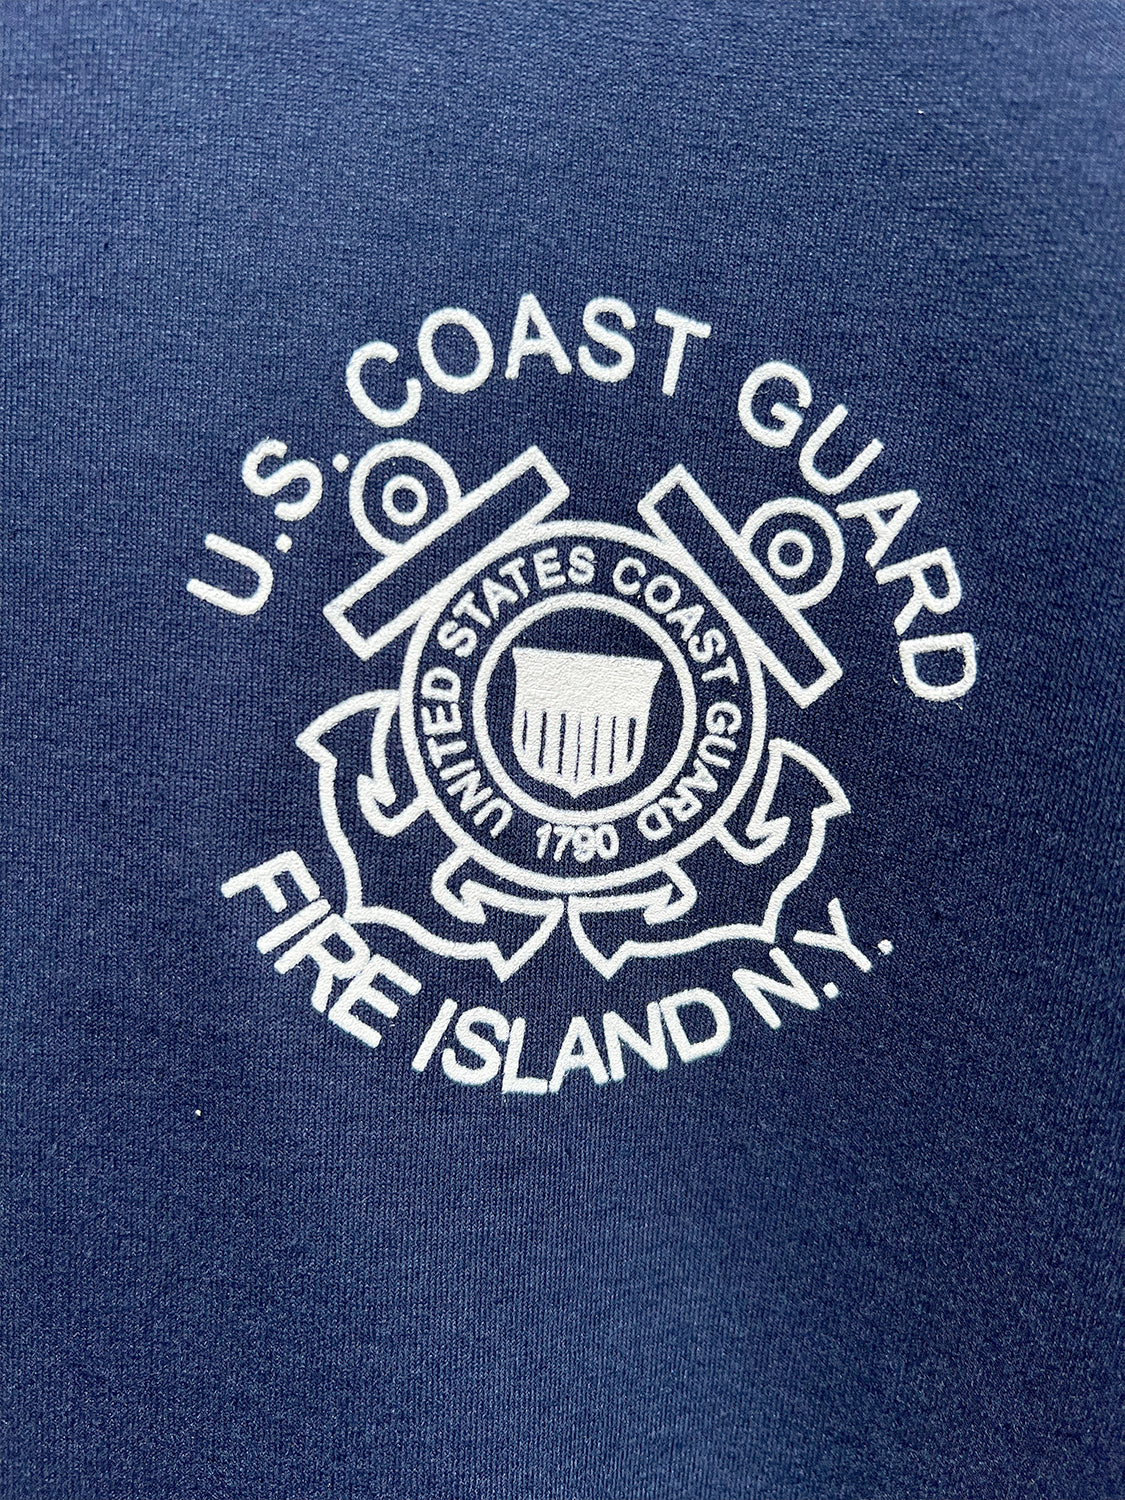 Fire Island Coast Guard Tee - 1990s